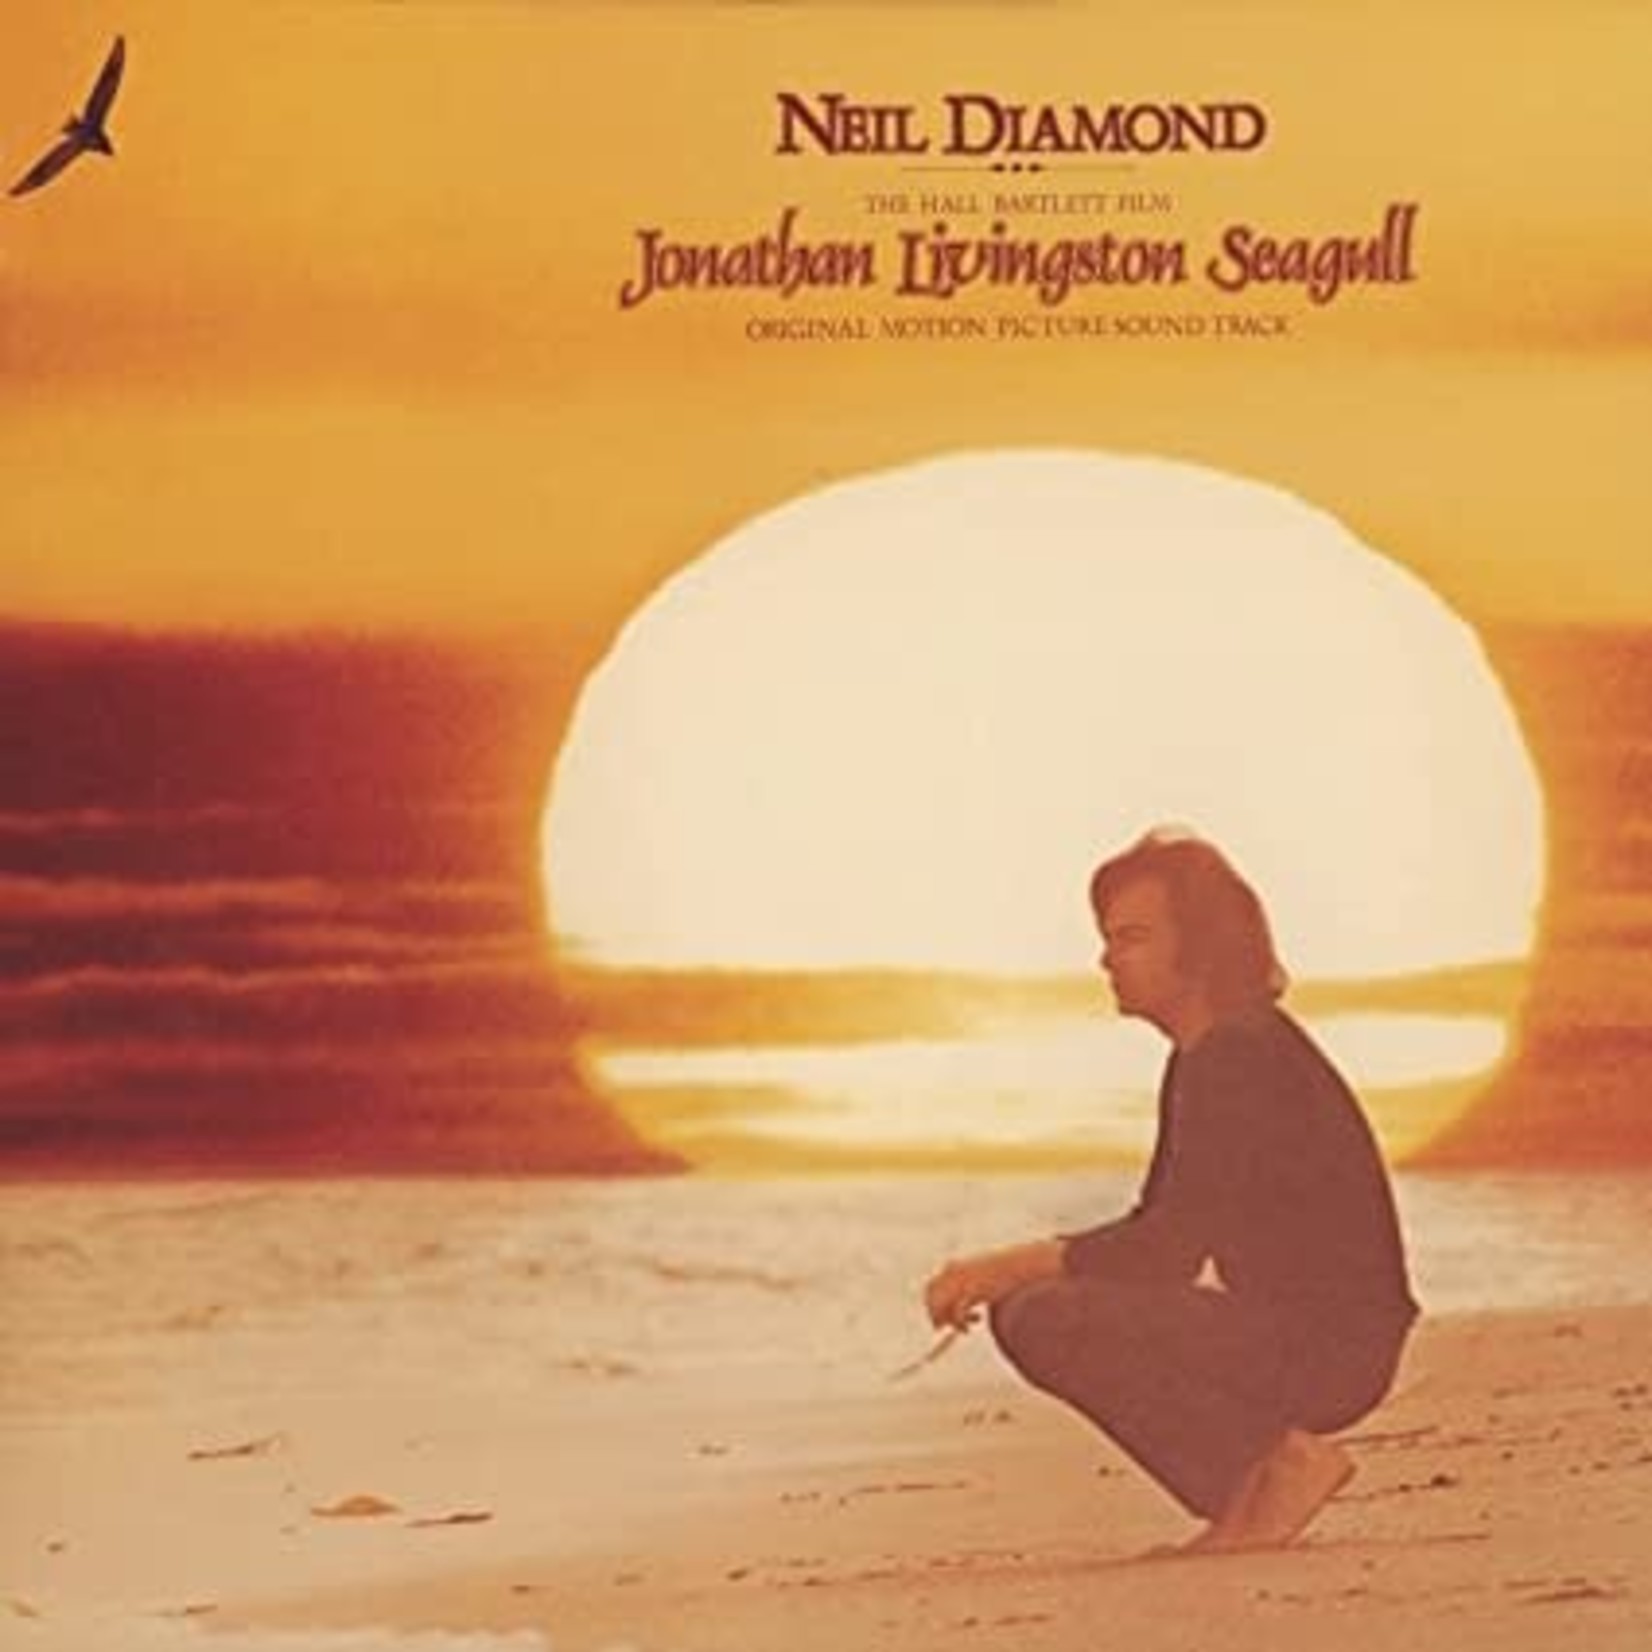 [Vintage] Neil Diamond - Jonathan Livingston Seagull (soundtrack)